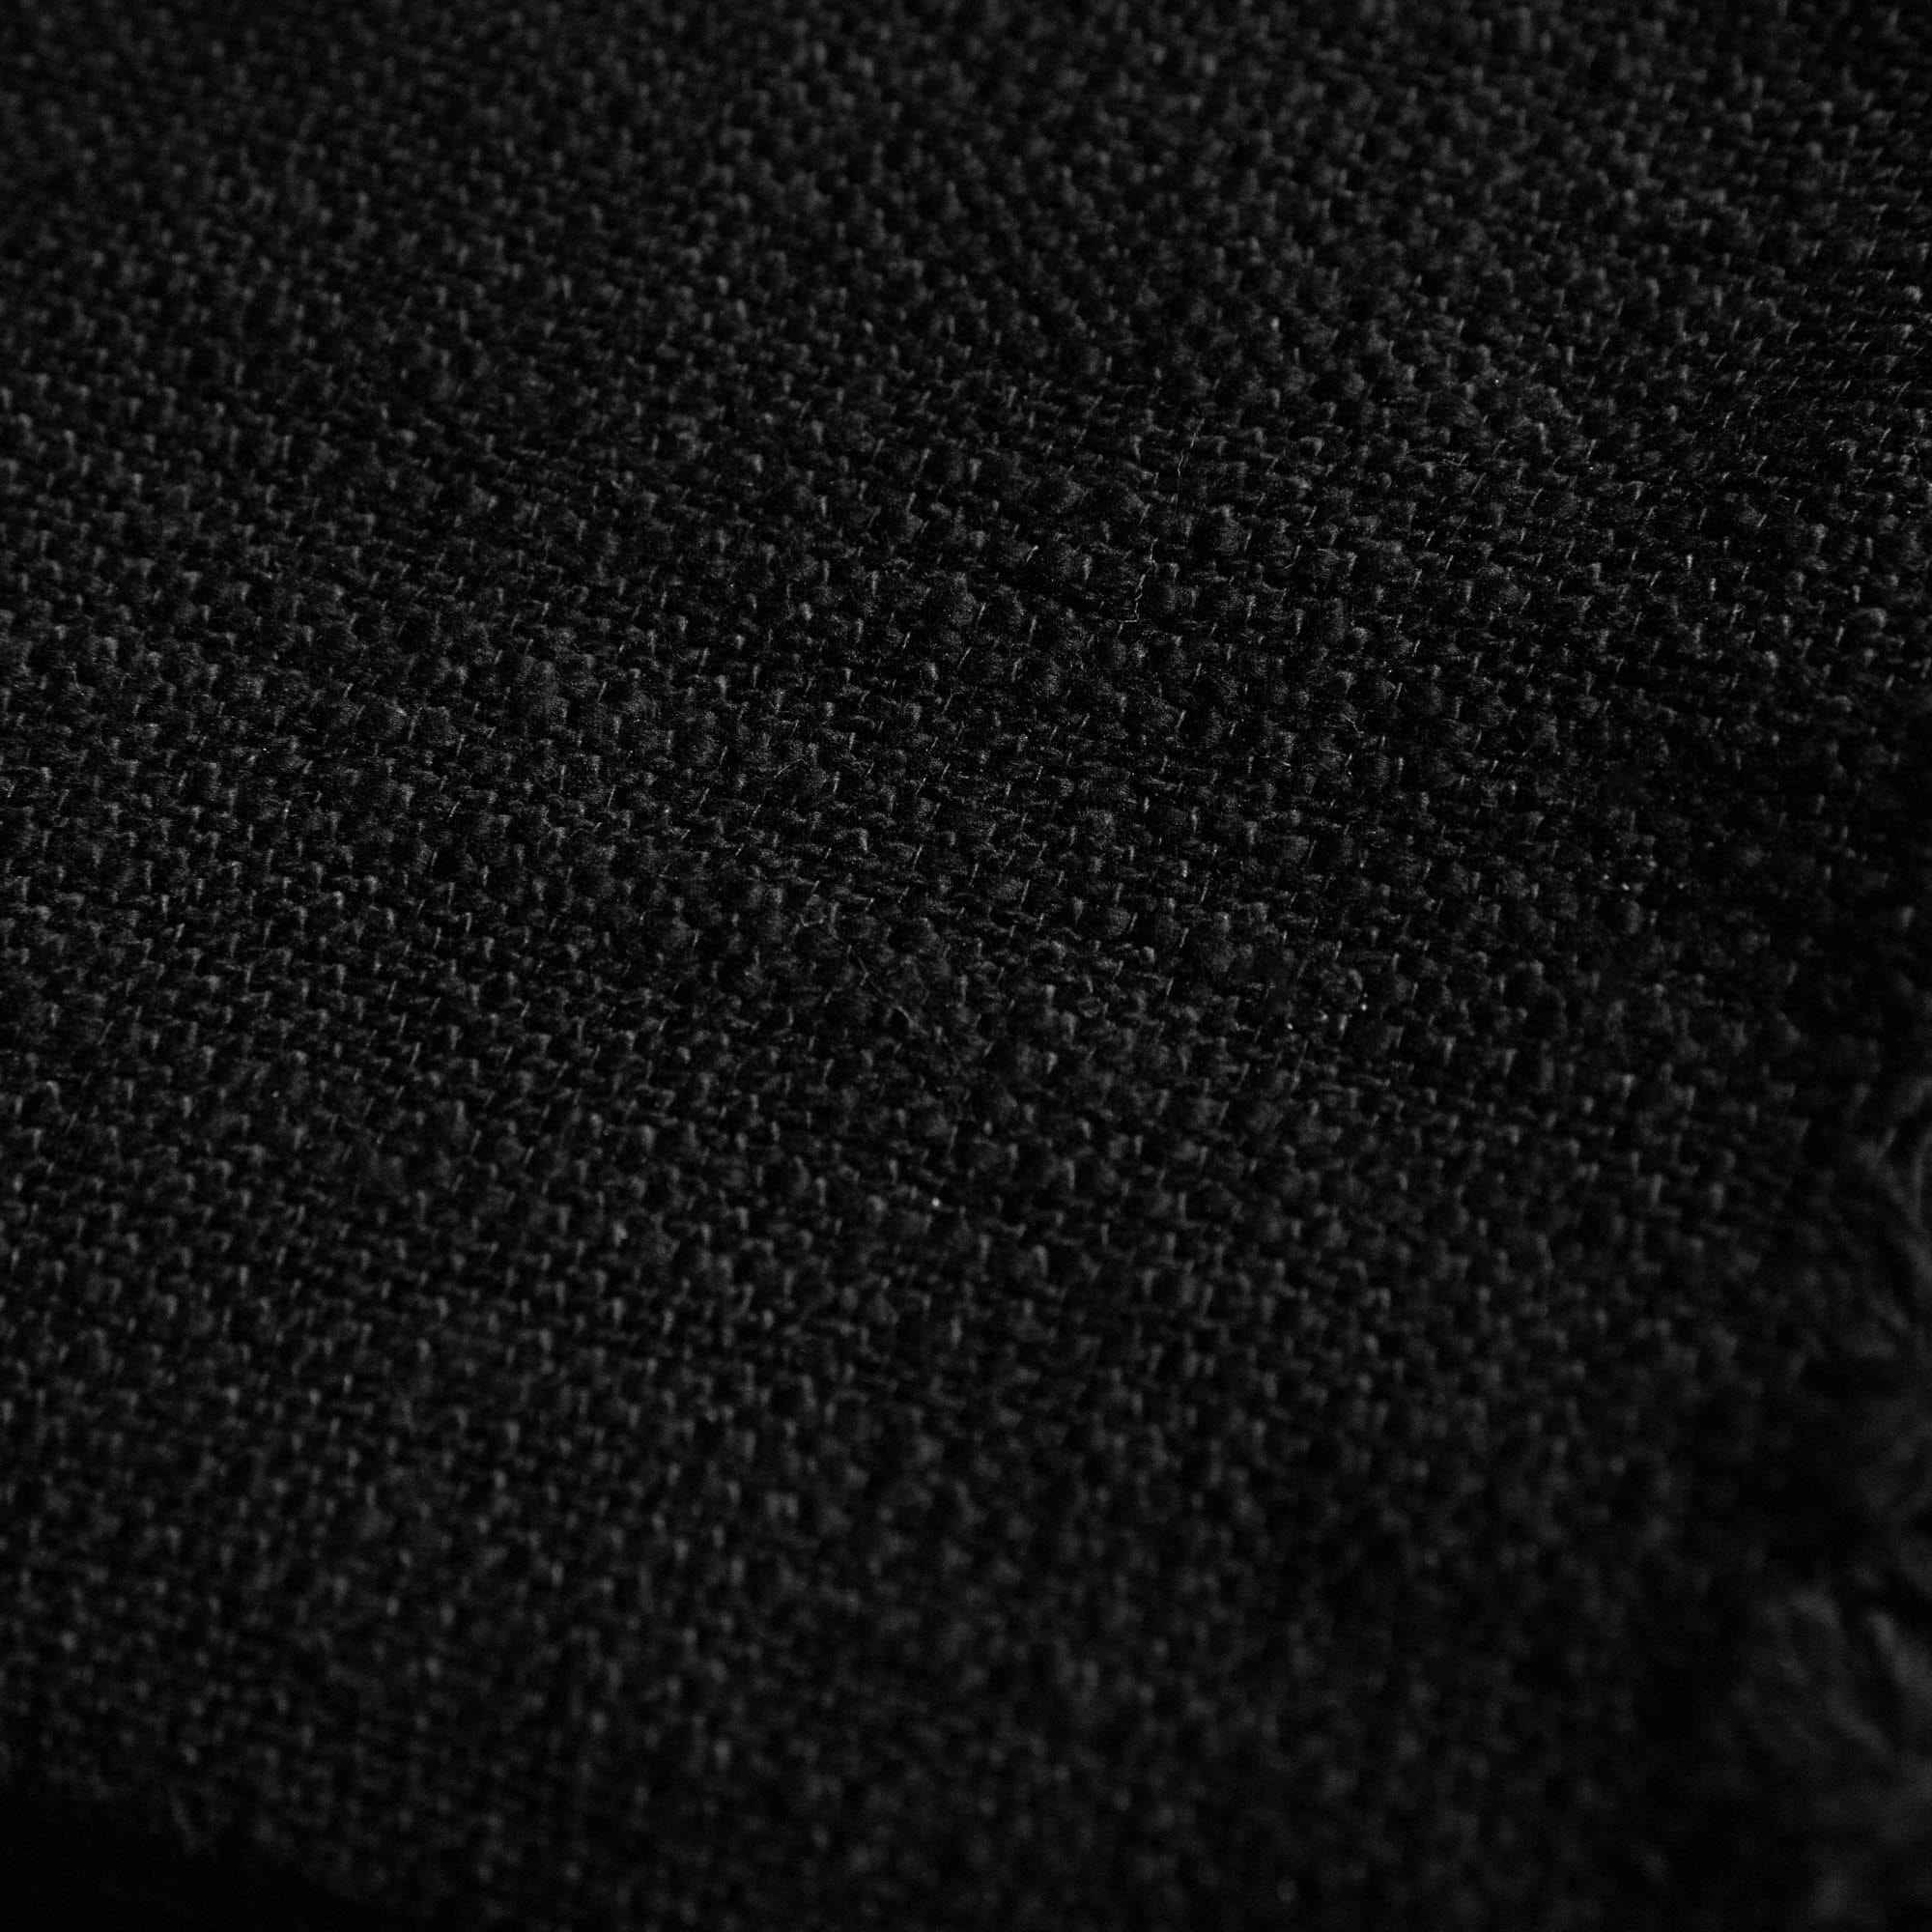 Turkish Linen Towel | Solid Black Home Textiles 